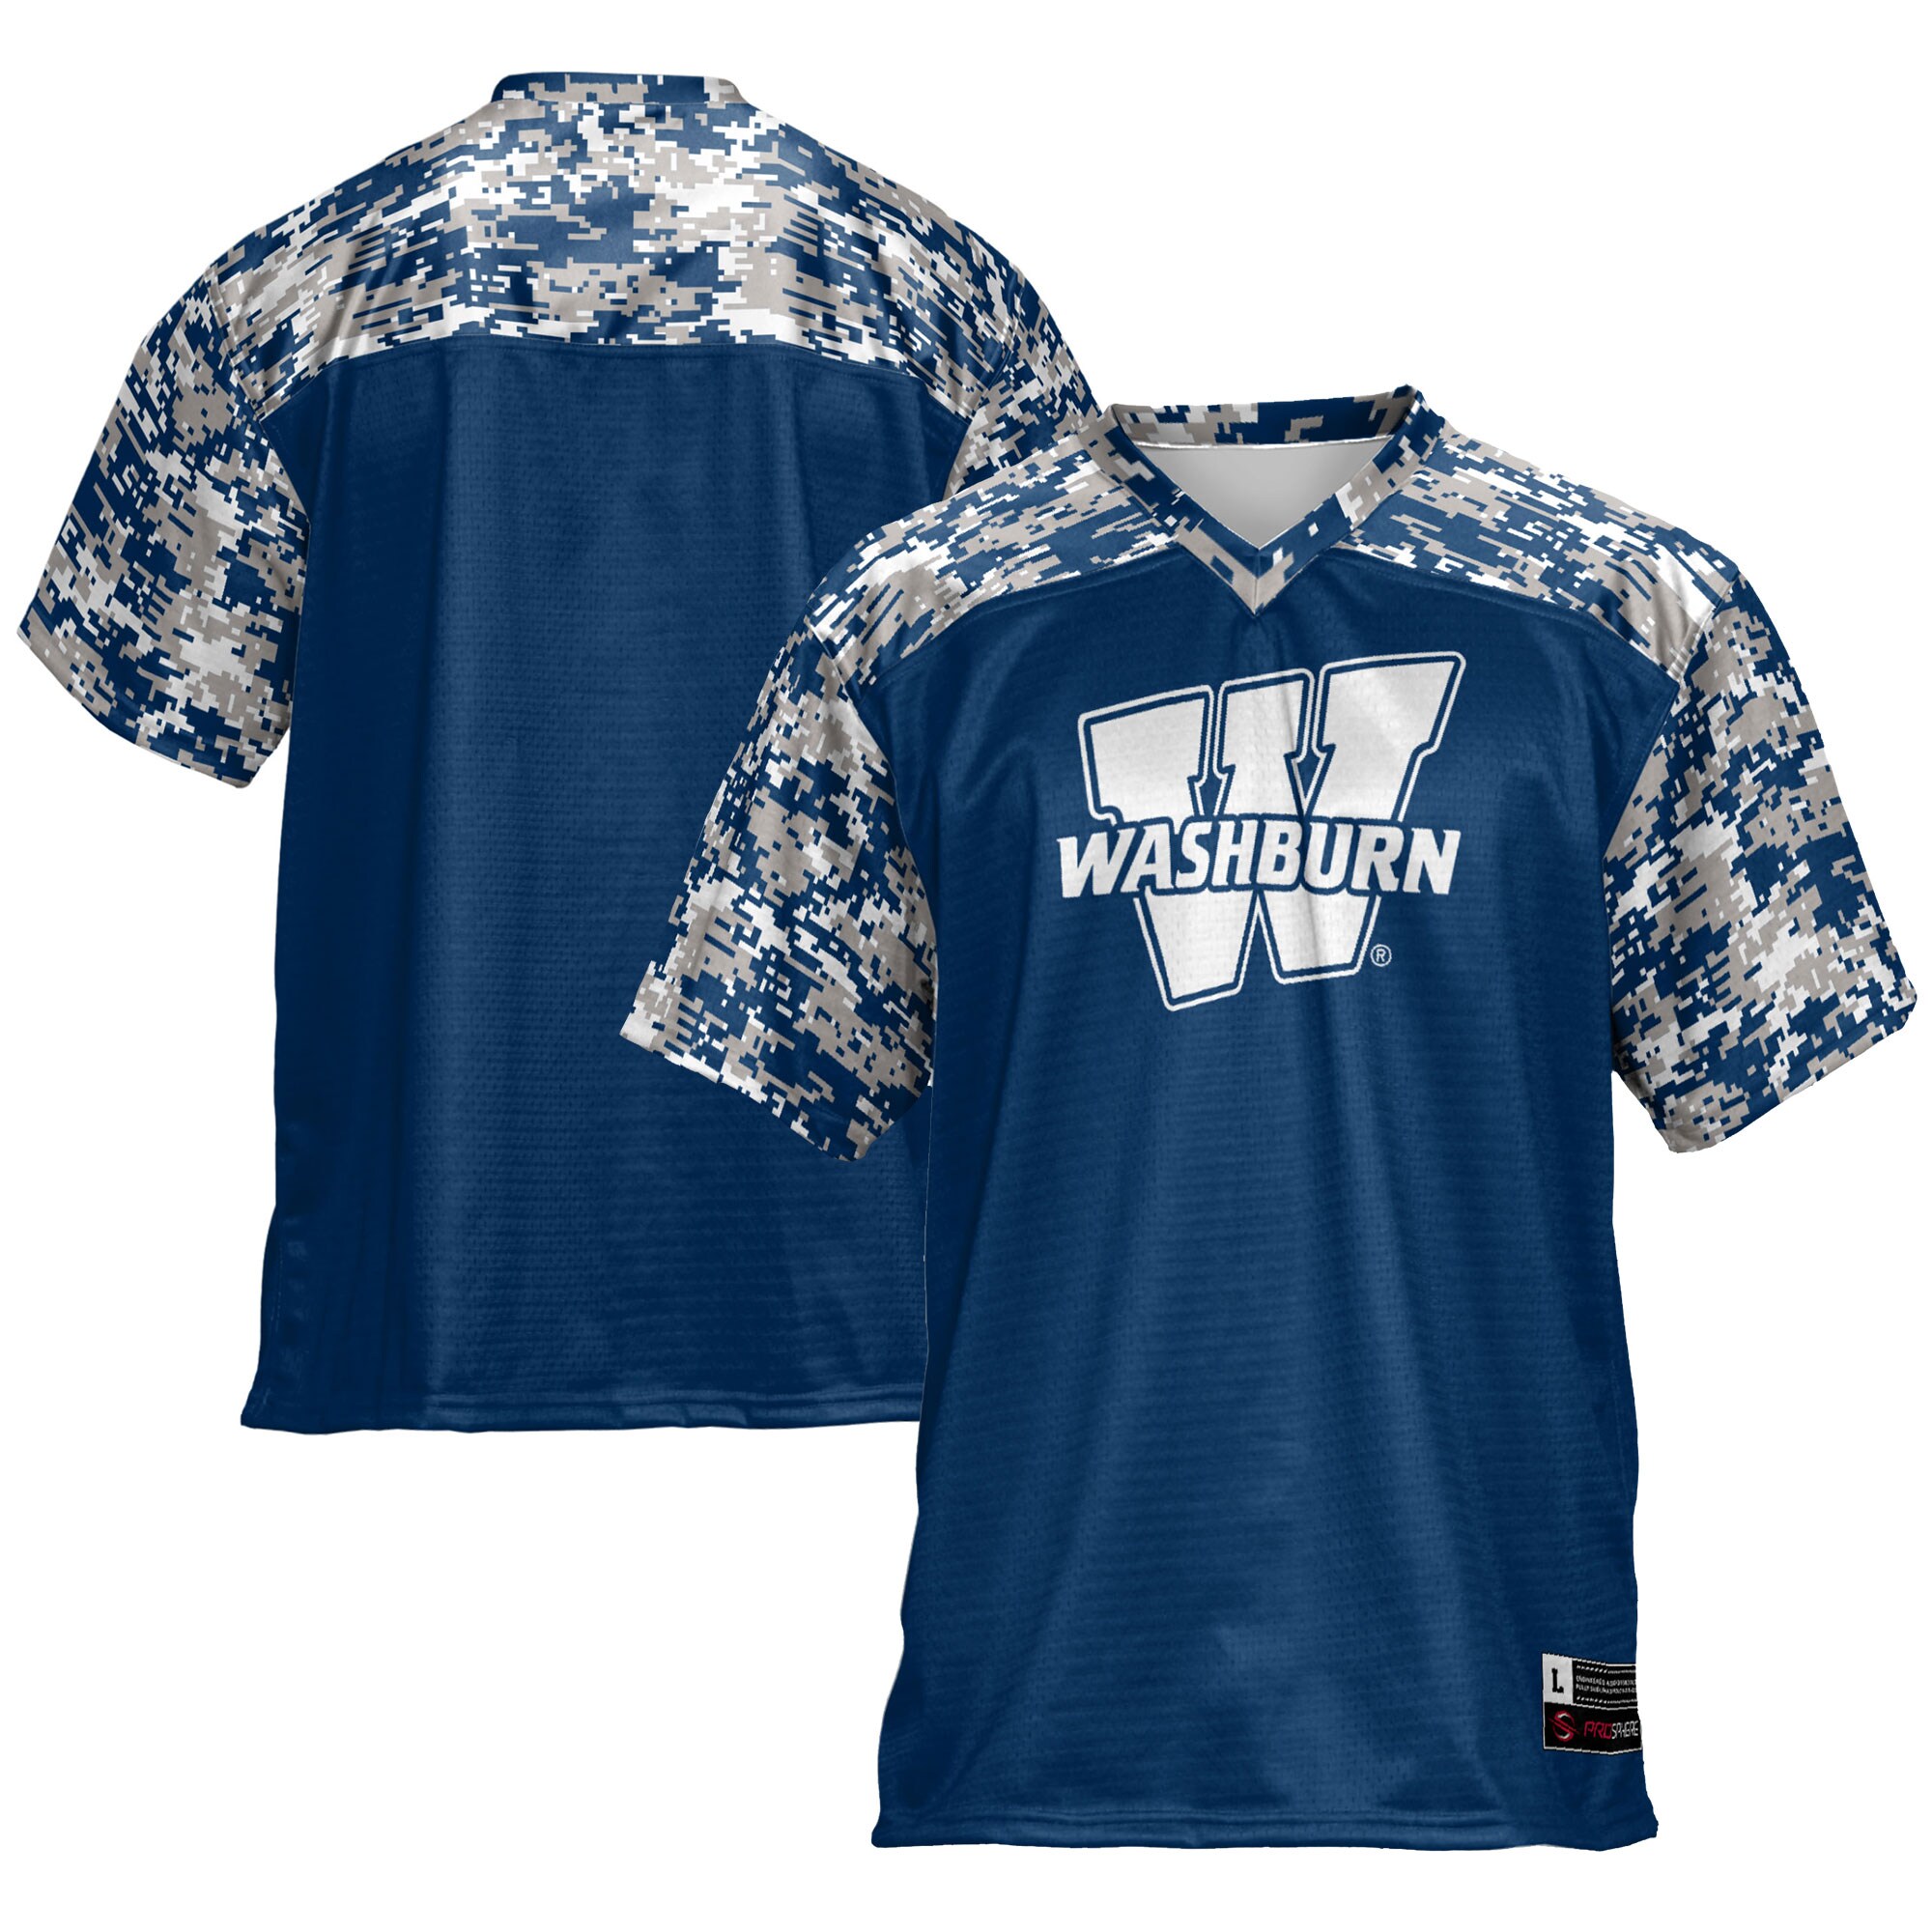 Washburn Ichabods  Football Shirts Jersey - Blue For Youth Women Men